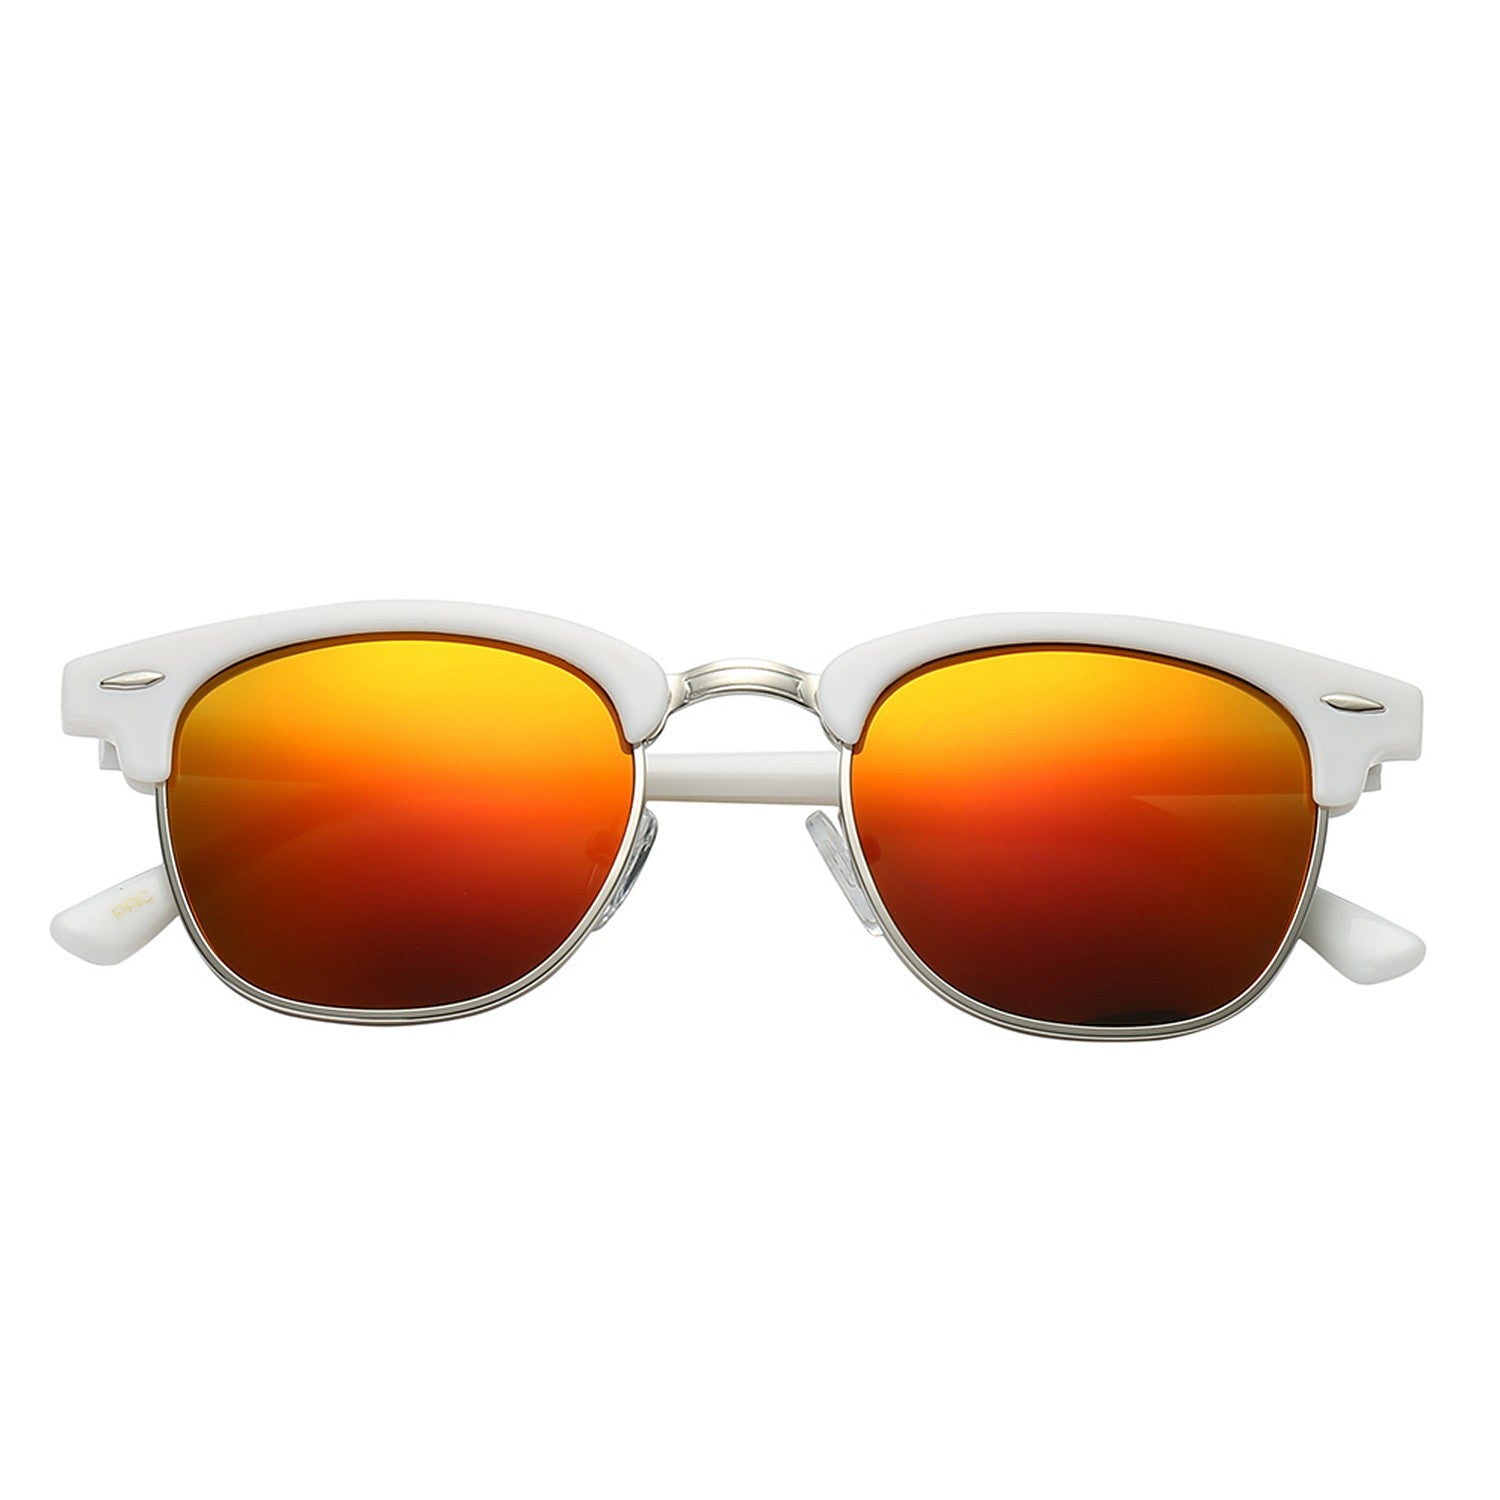 Polarspex Polarized Malcom Half Frame Semi-Rimless Style Unisex Sunglasses with Gloss White Frames and Lava Red Lenses